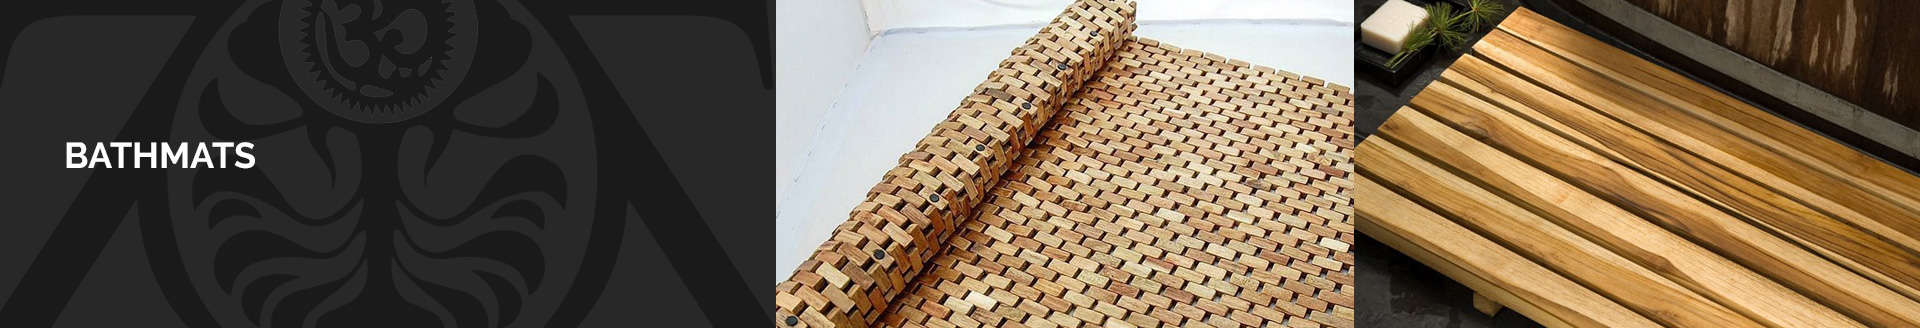 bath mats catalogue manufacturers indonesia exporters wholesalers suppliers bali java jepara zenddu